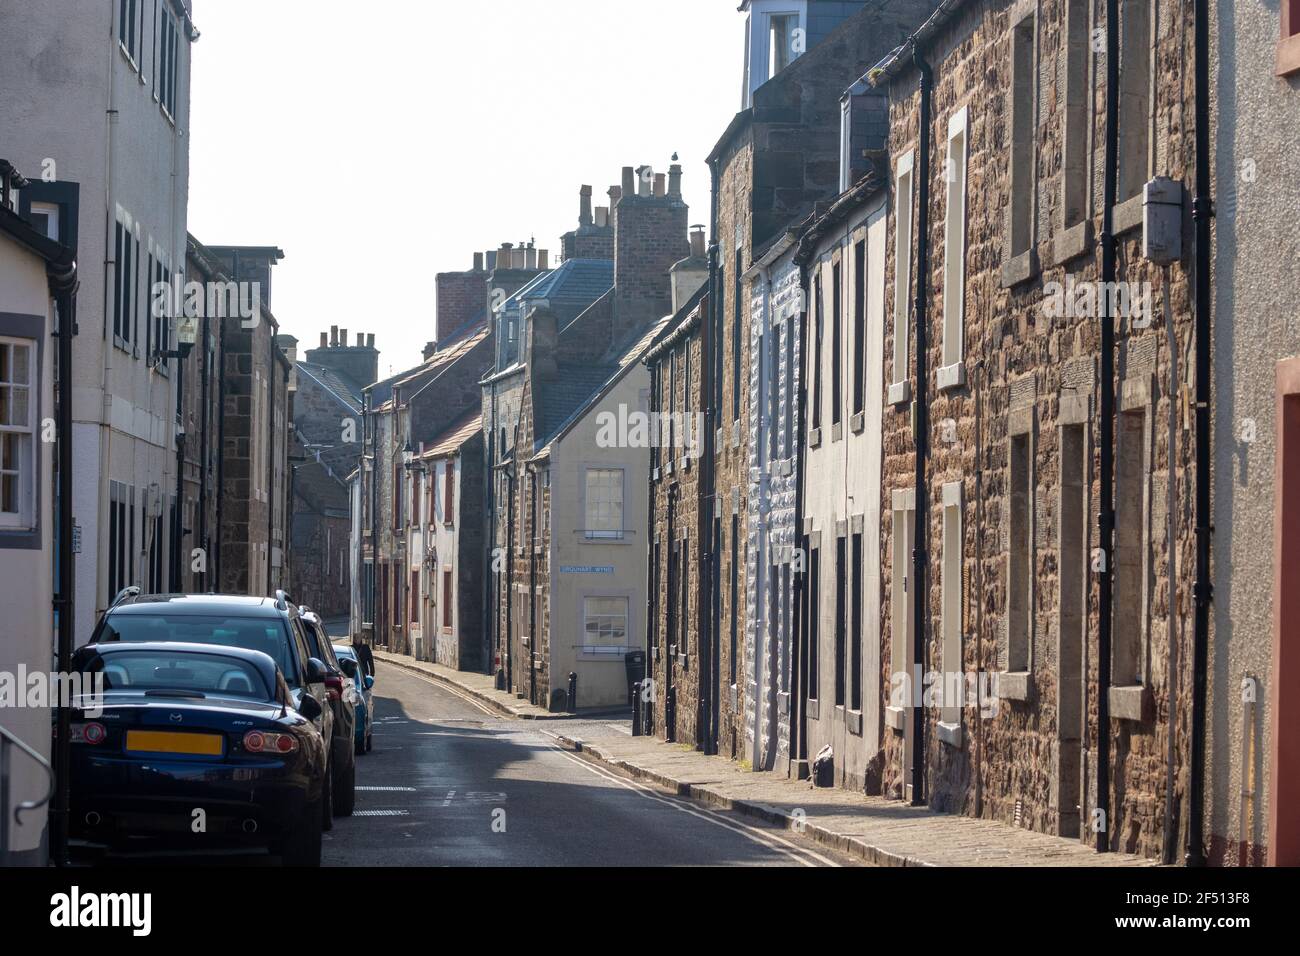 A narrow street in the coastal village of Cellardyke , Fife, SCotland. Stock Photo